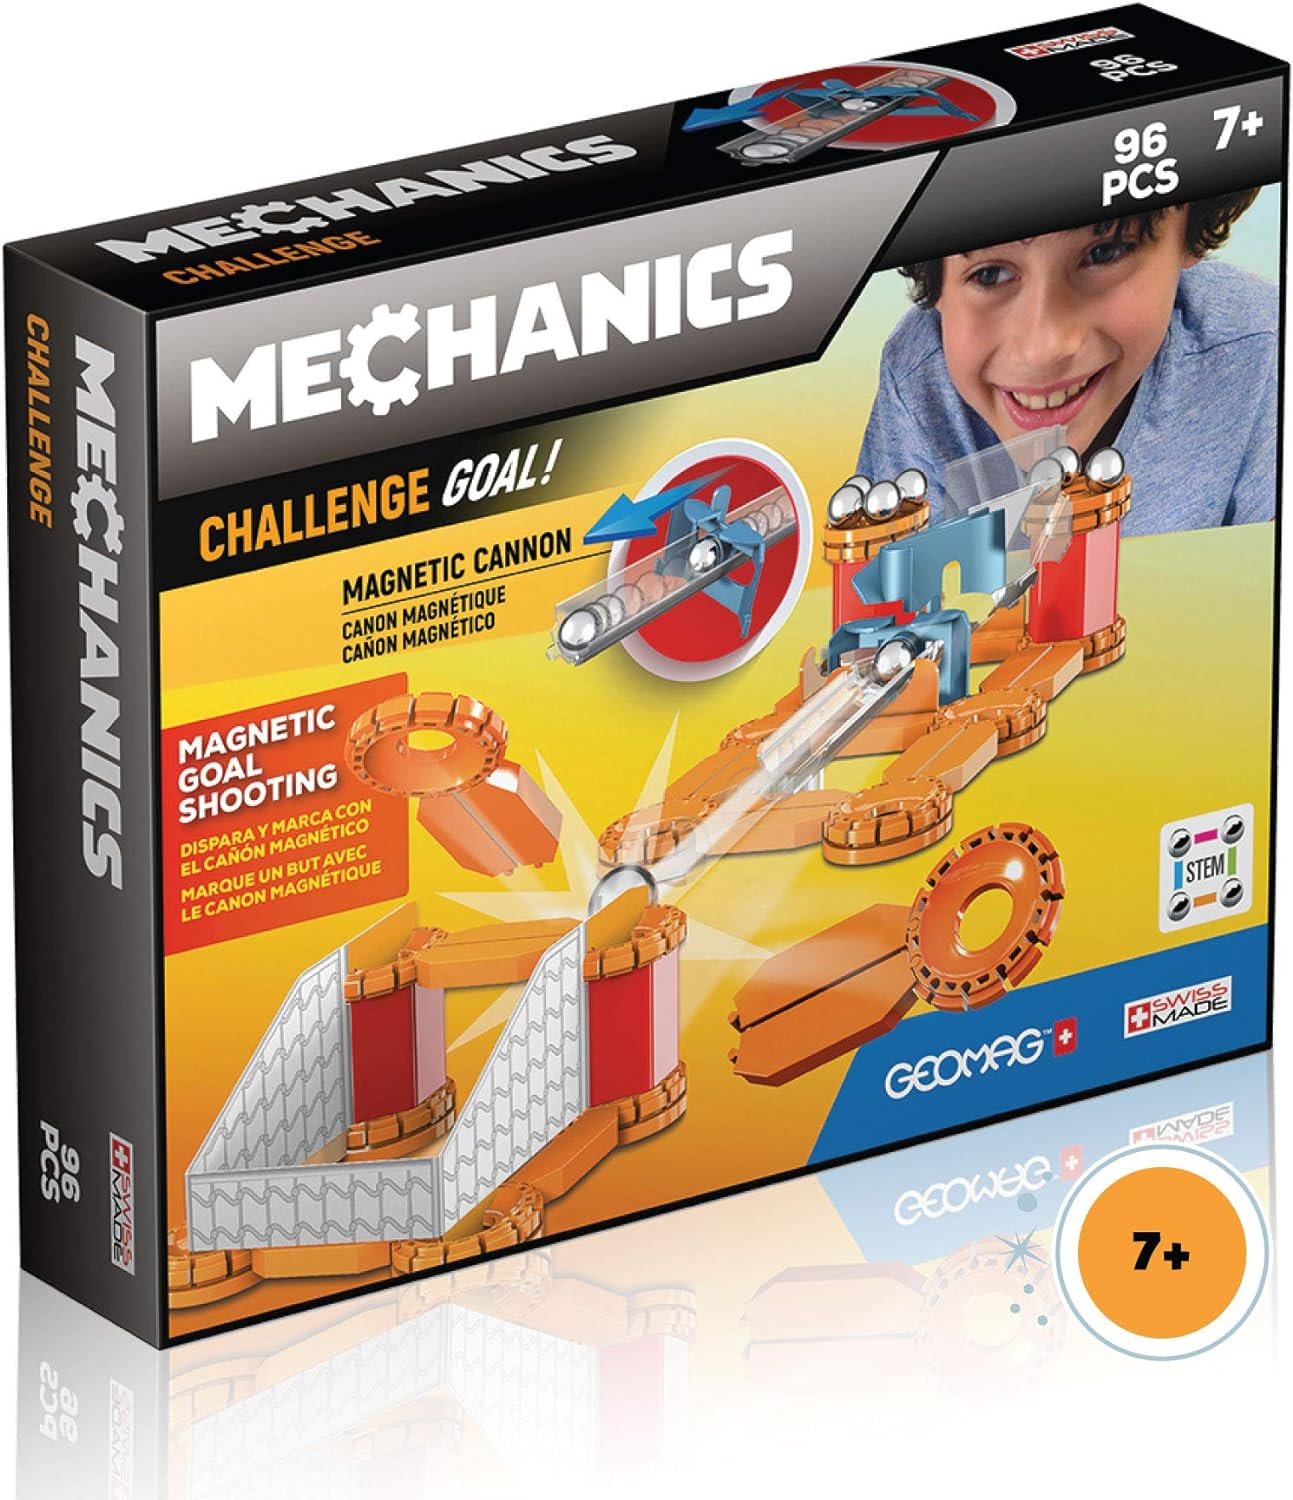 Geomag Magnetic Mechanics Goal Challenge Educational Board Game. 2964 units. EXW Ohio $8.95 units.